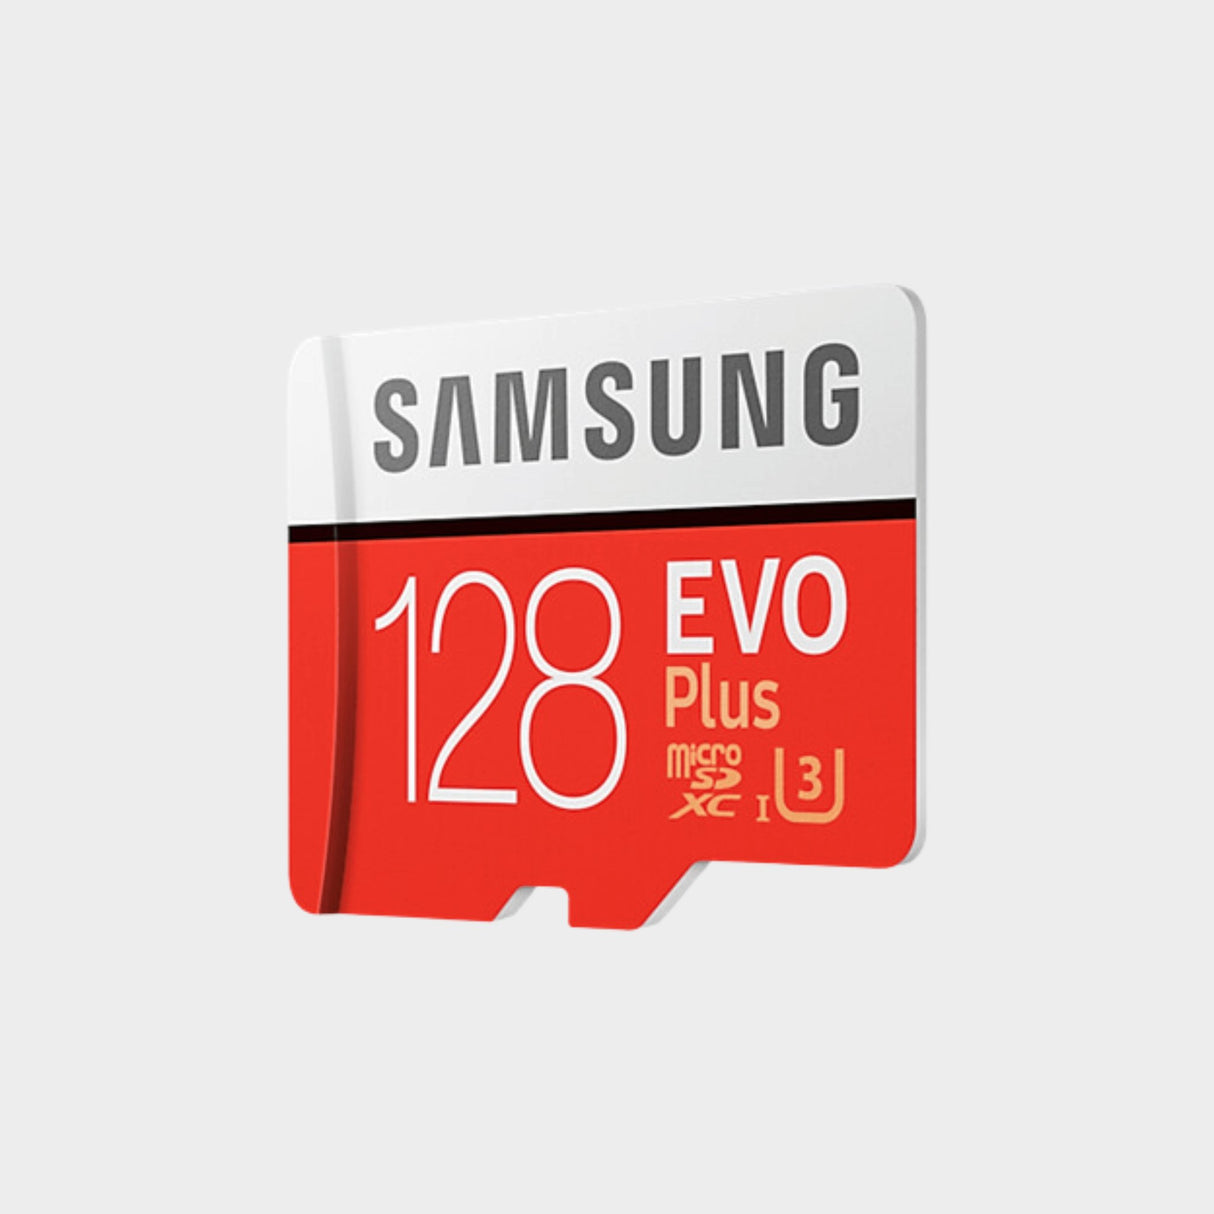 Samsung 128GB Memory Card Micro SD – Red | KWT Tech Mart